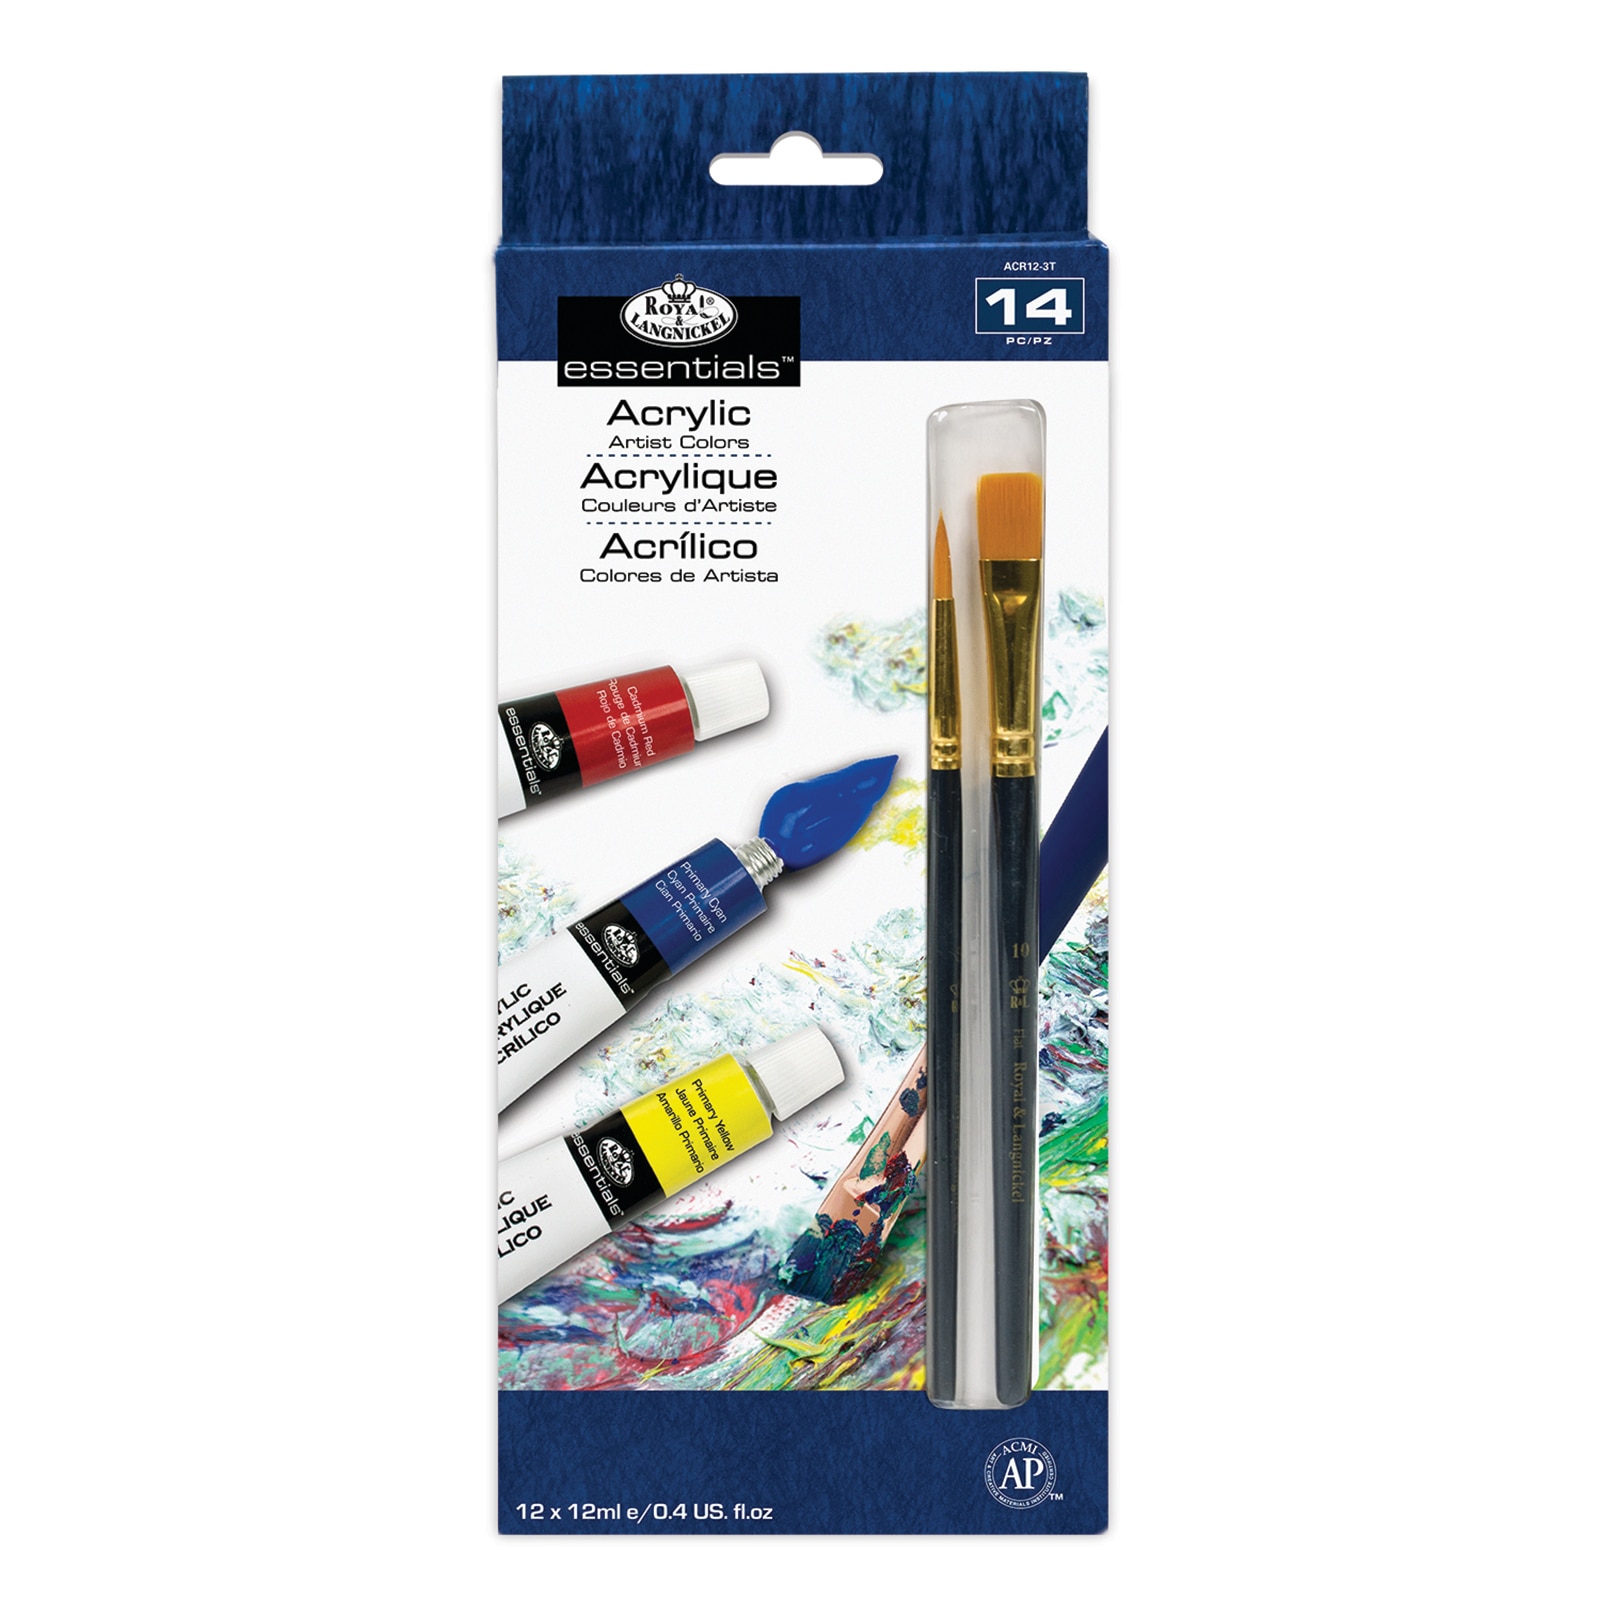 Royal Brush Acrylic Artist Paint Set, 12-Colors